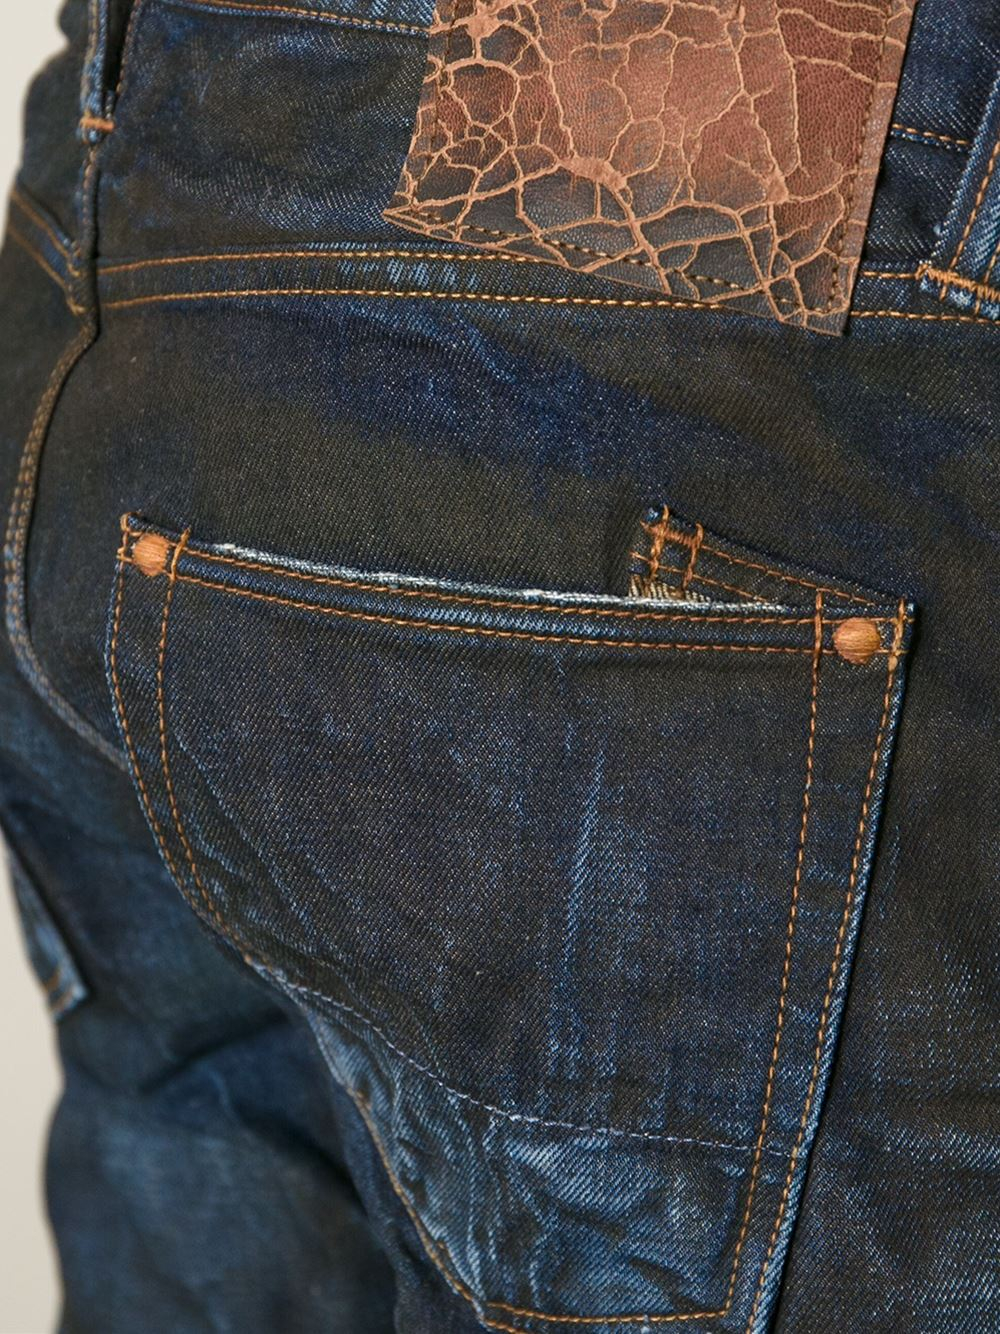 PRPS Noir 'Demon' Jeans in Blue for Men - Lyst